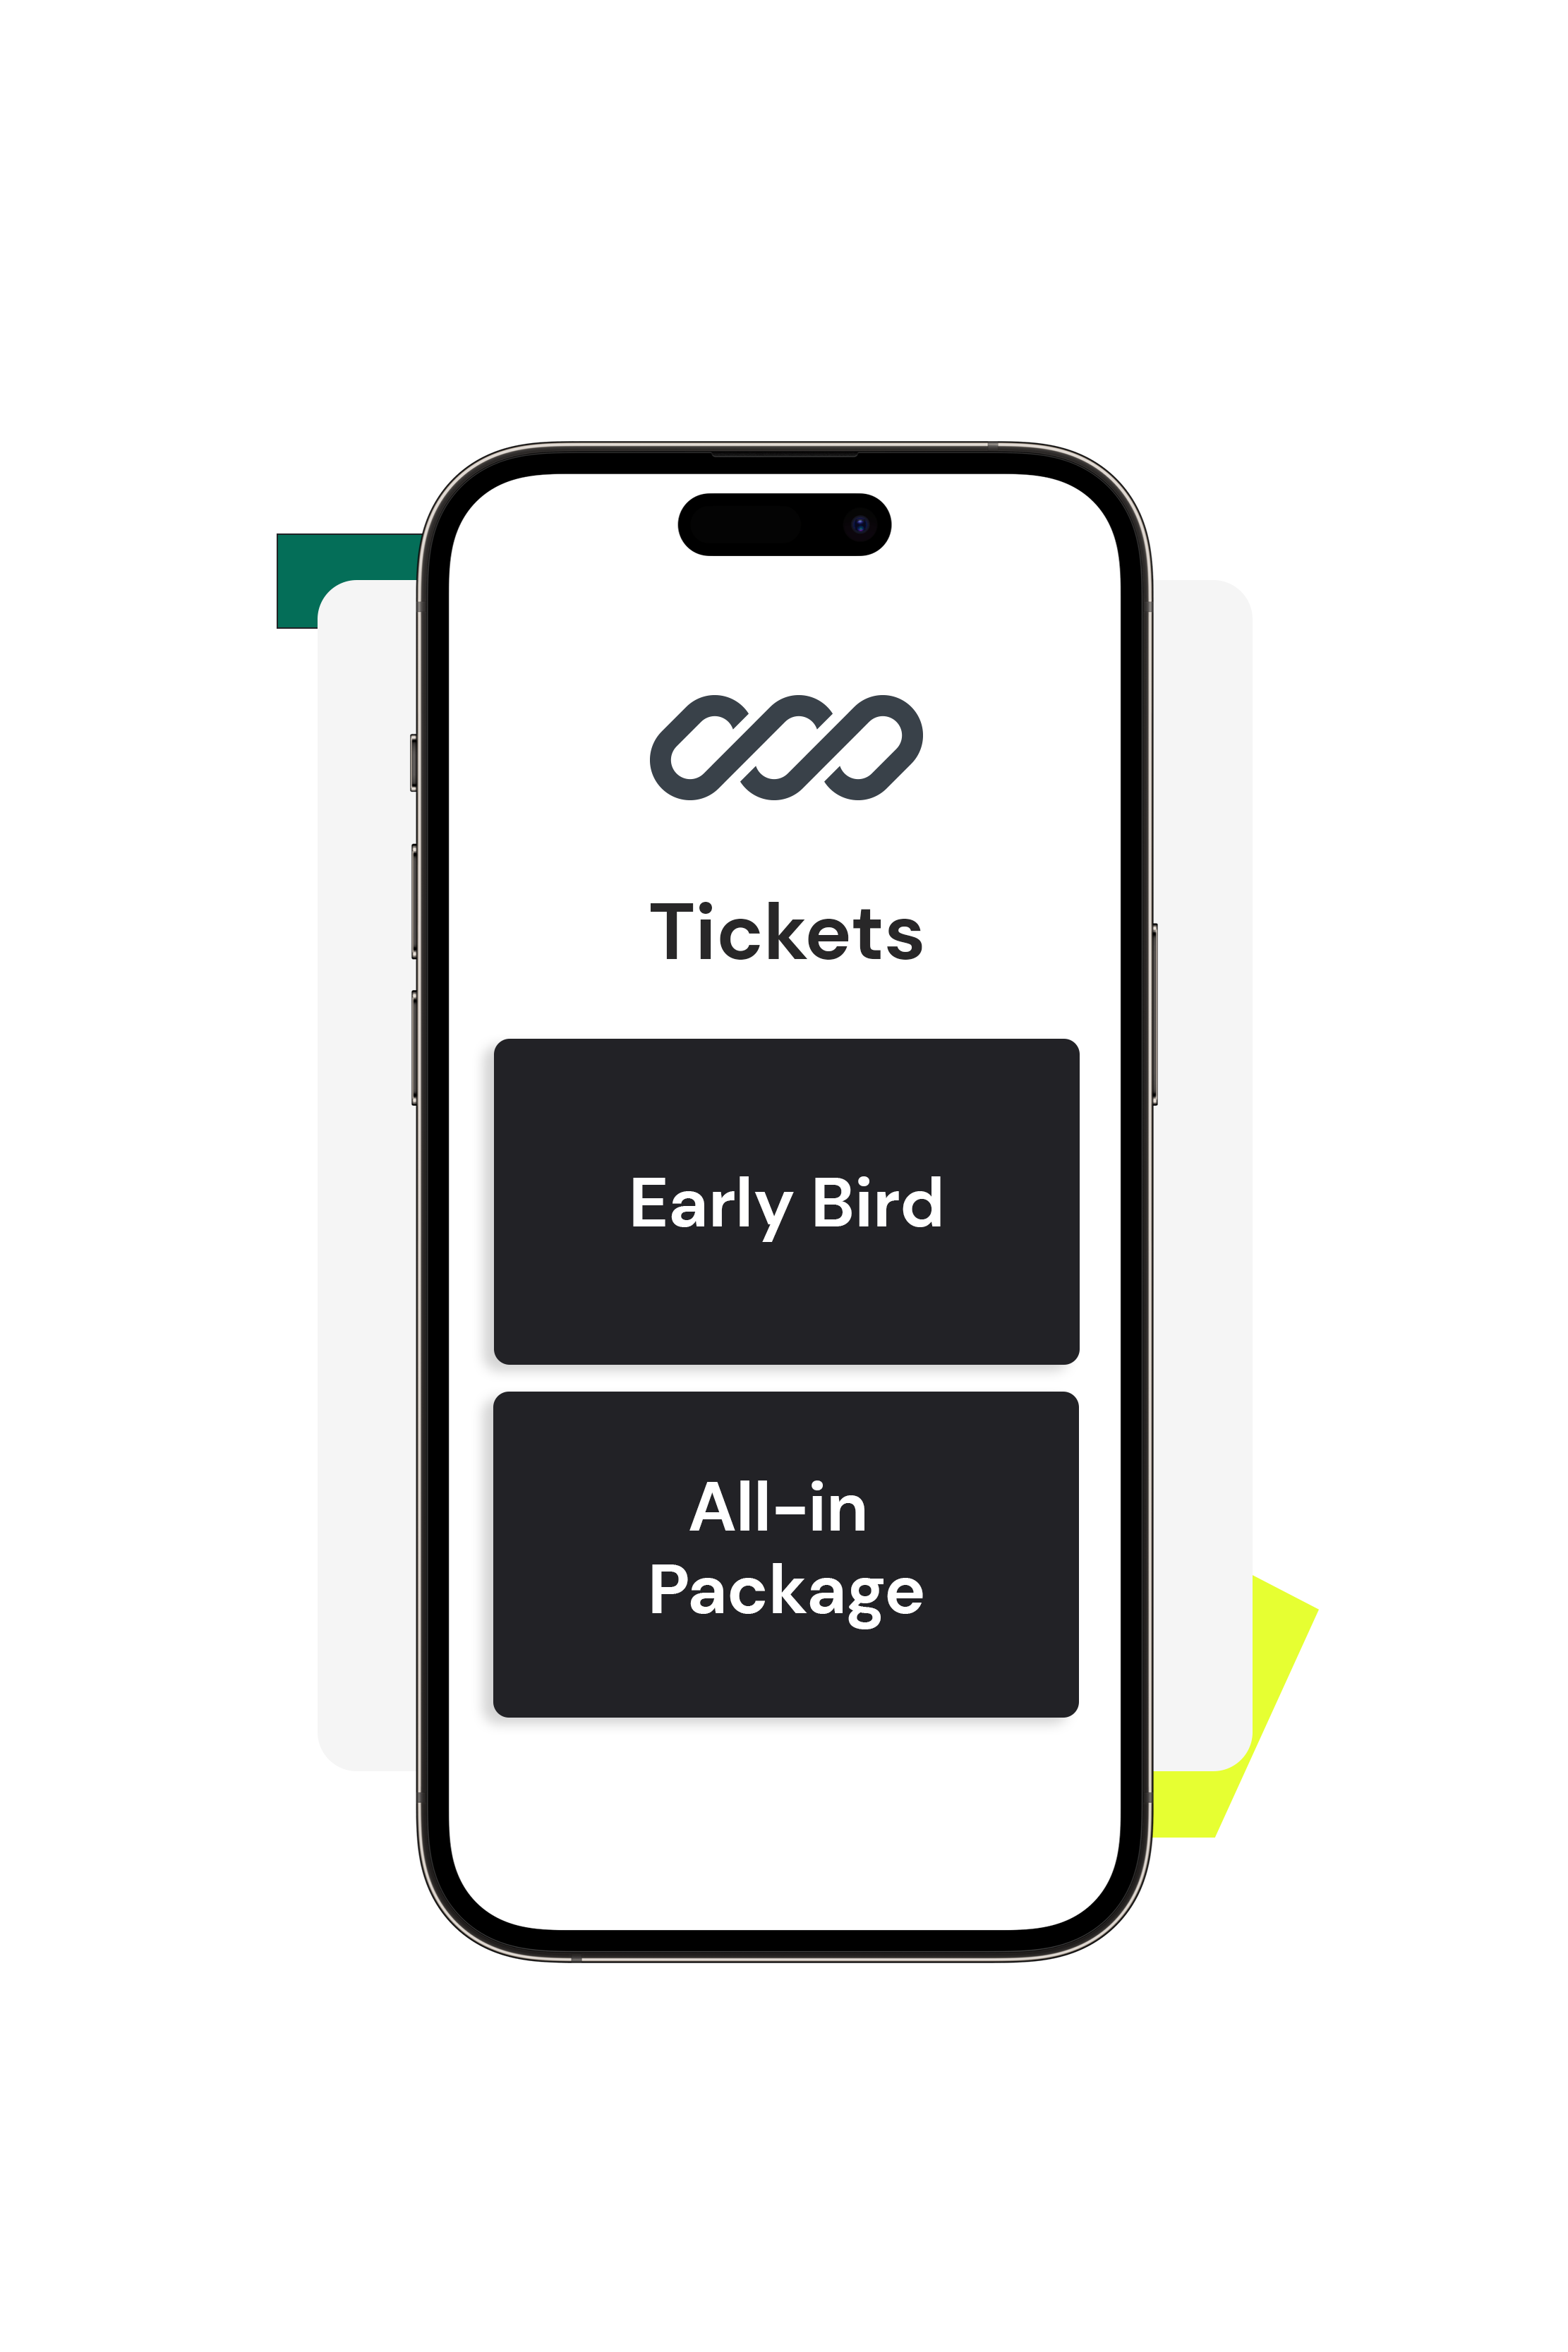 Ticket Types Screen-1